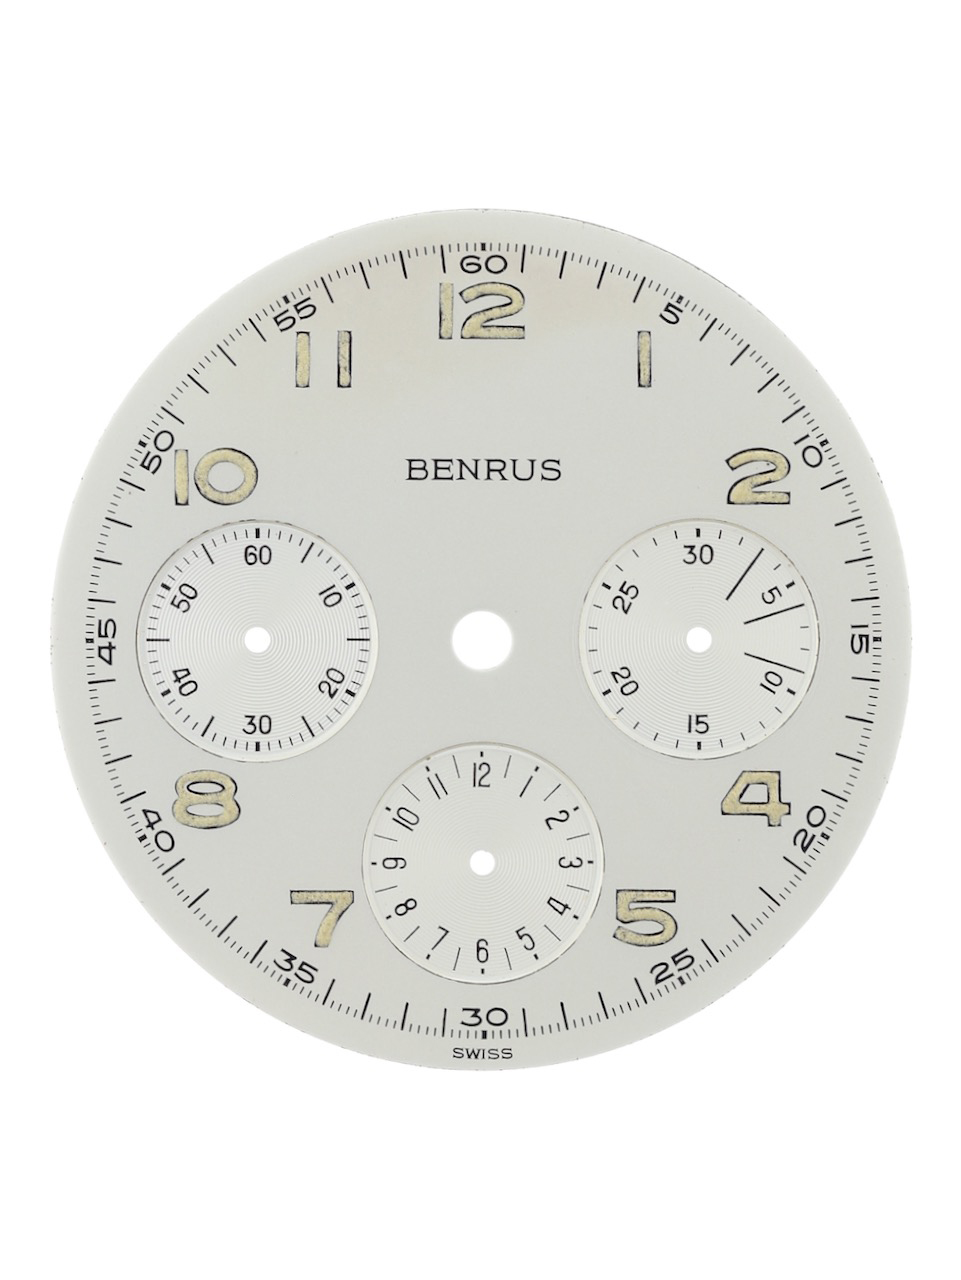 Benrus Venus 178 Chronograph 1950s - Gisbert A. Joseph Watches